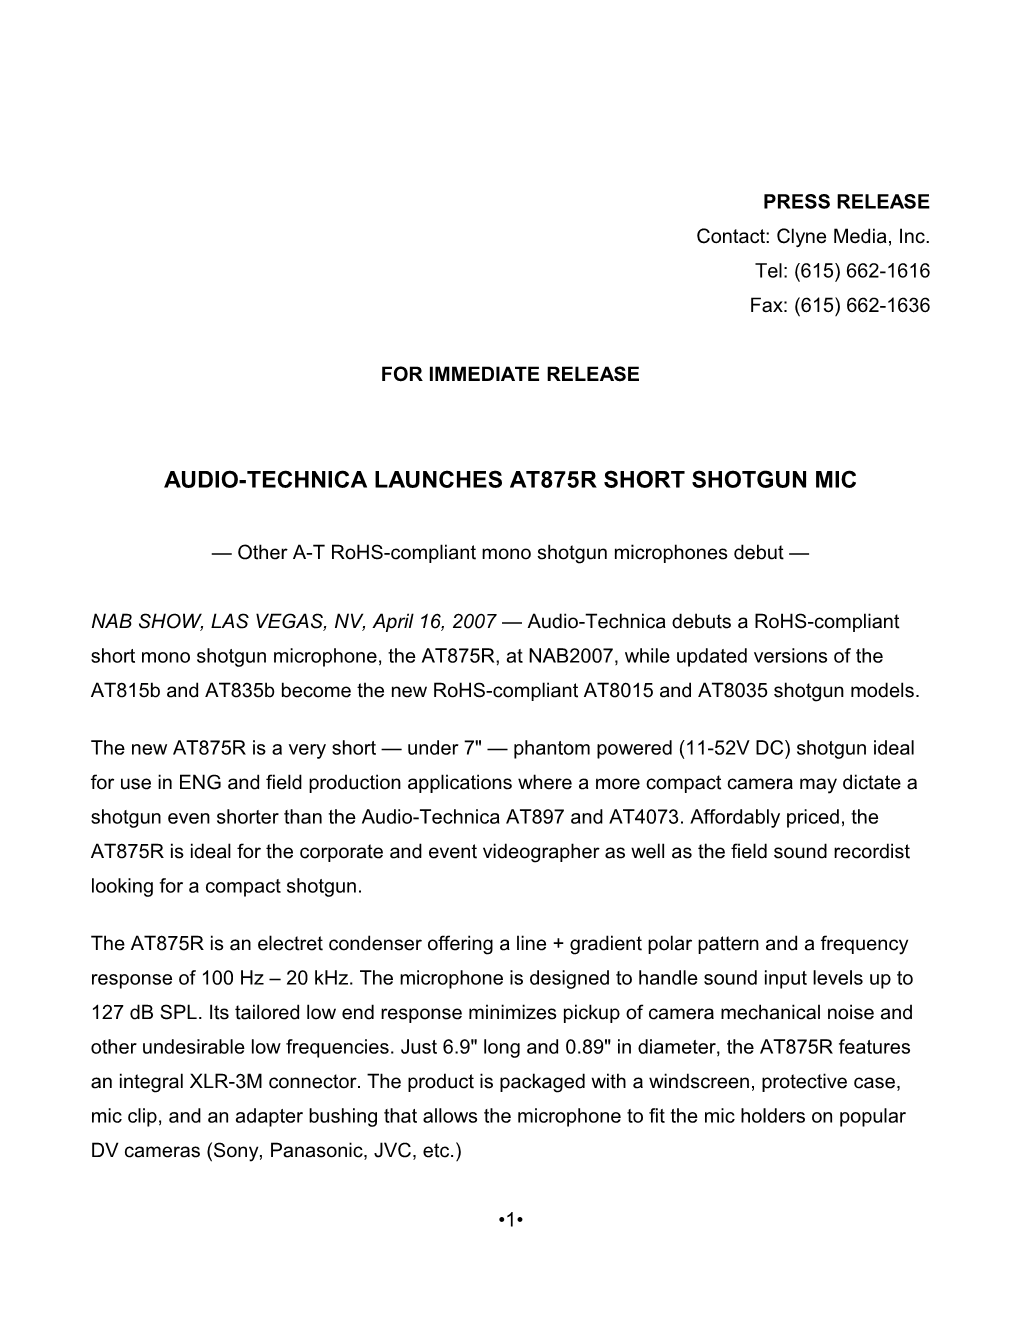 Audio-Technica Launches At875r Short Shotgun Mic